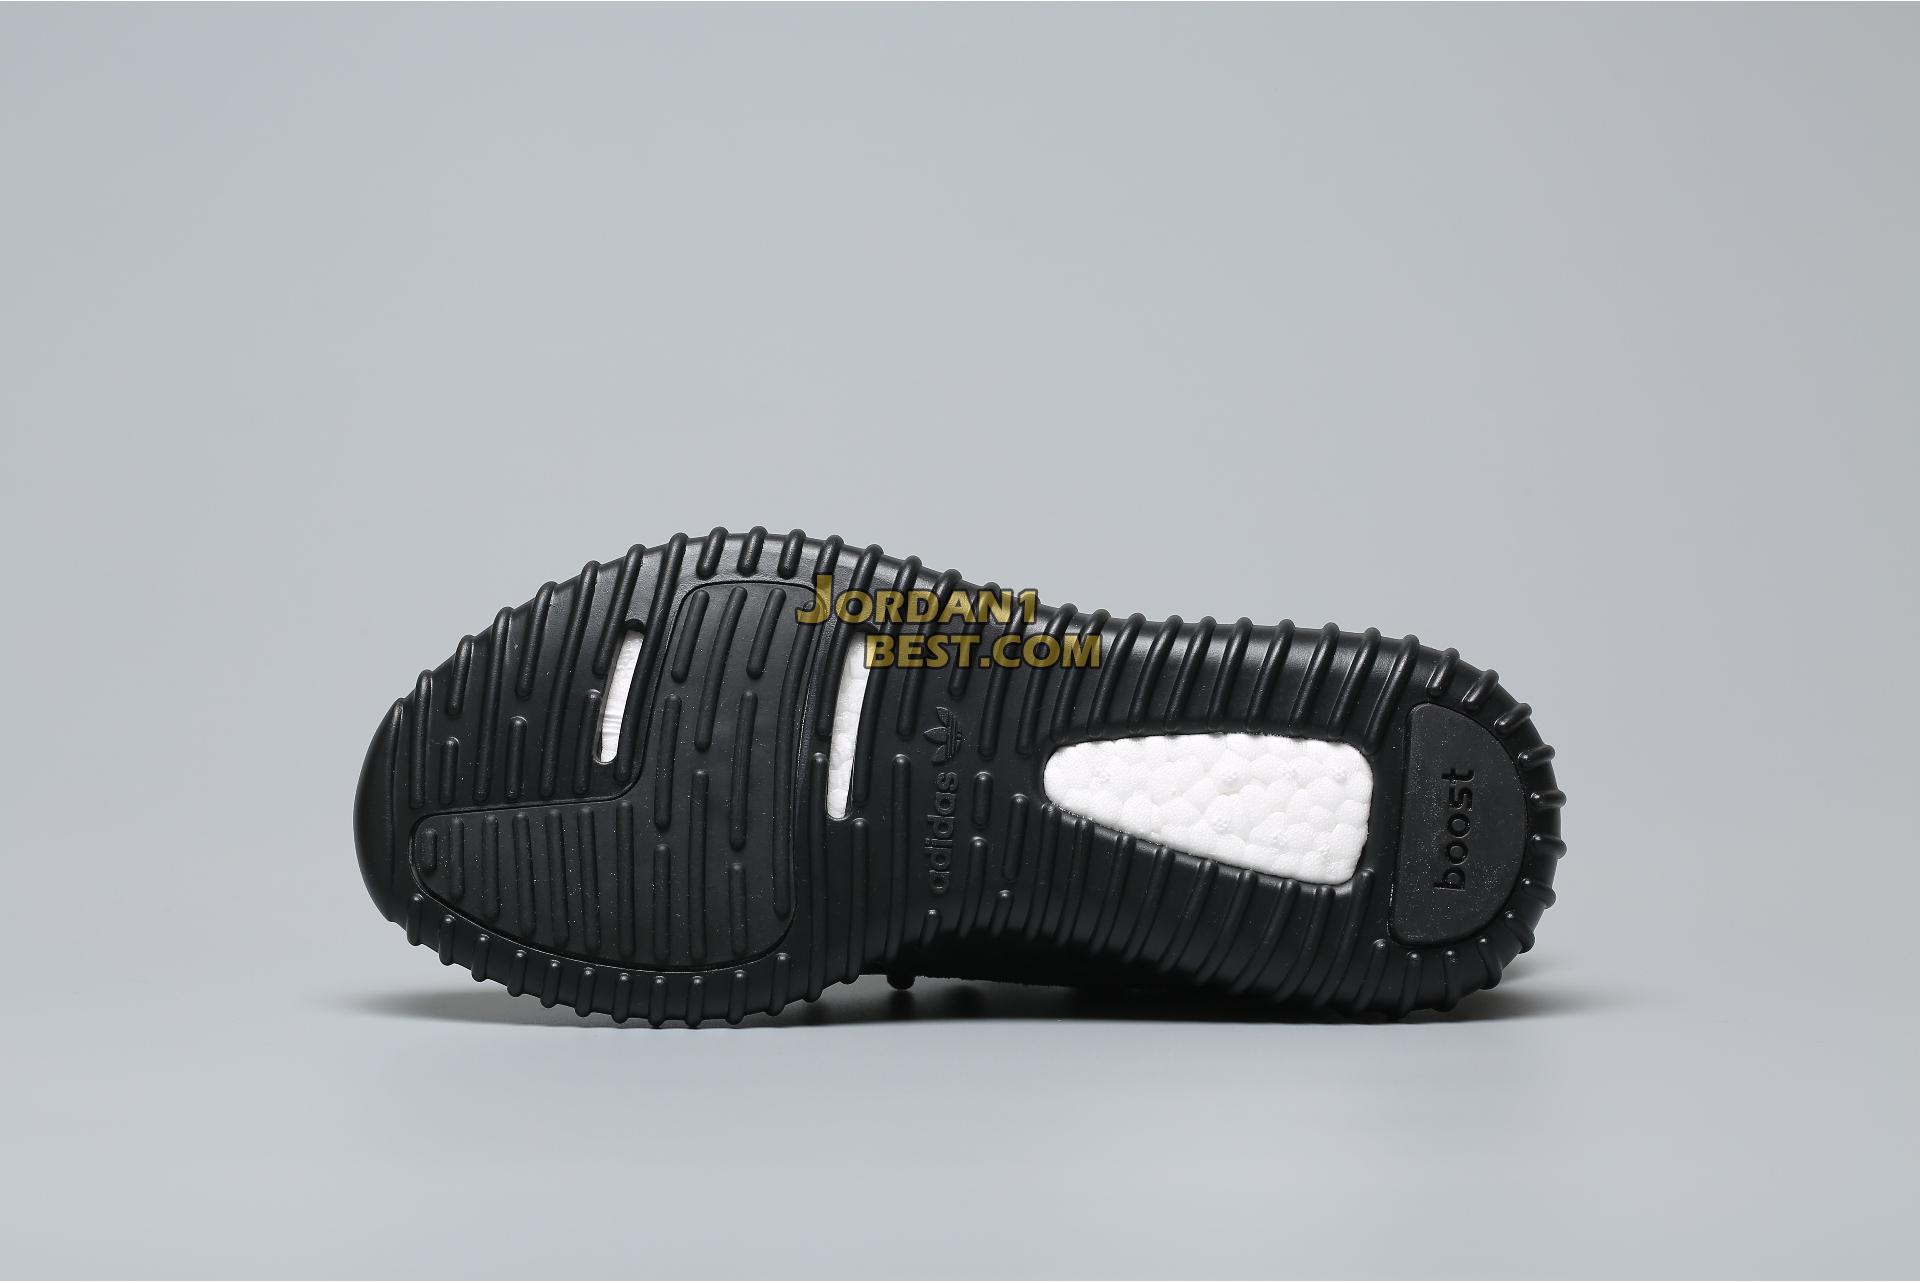 Adidas Yeezy Boost 350 "Pirate Black" AQ2659